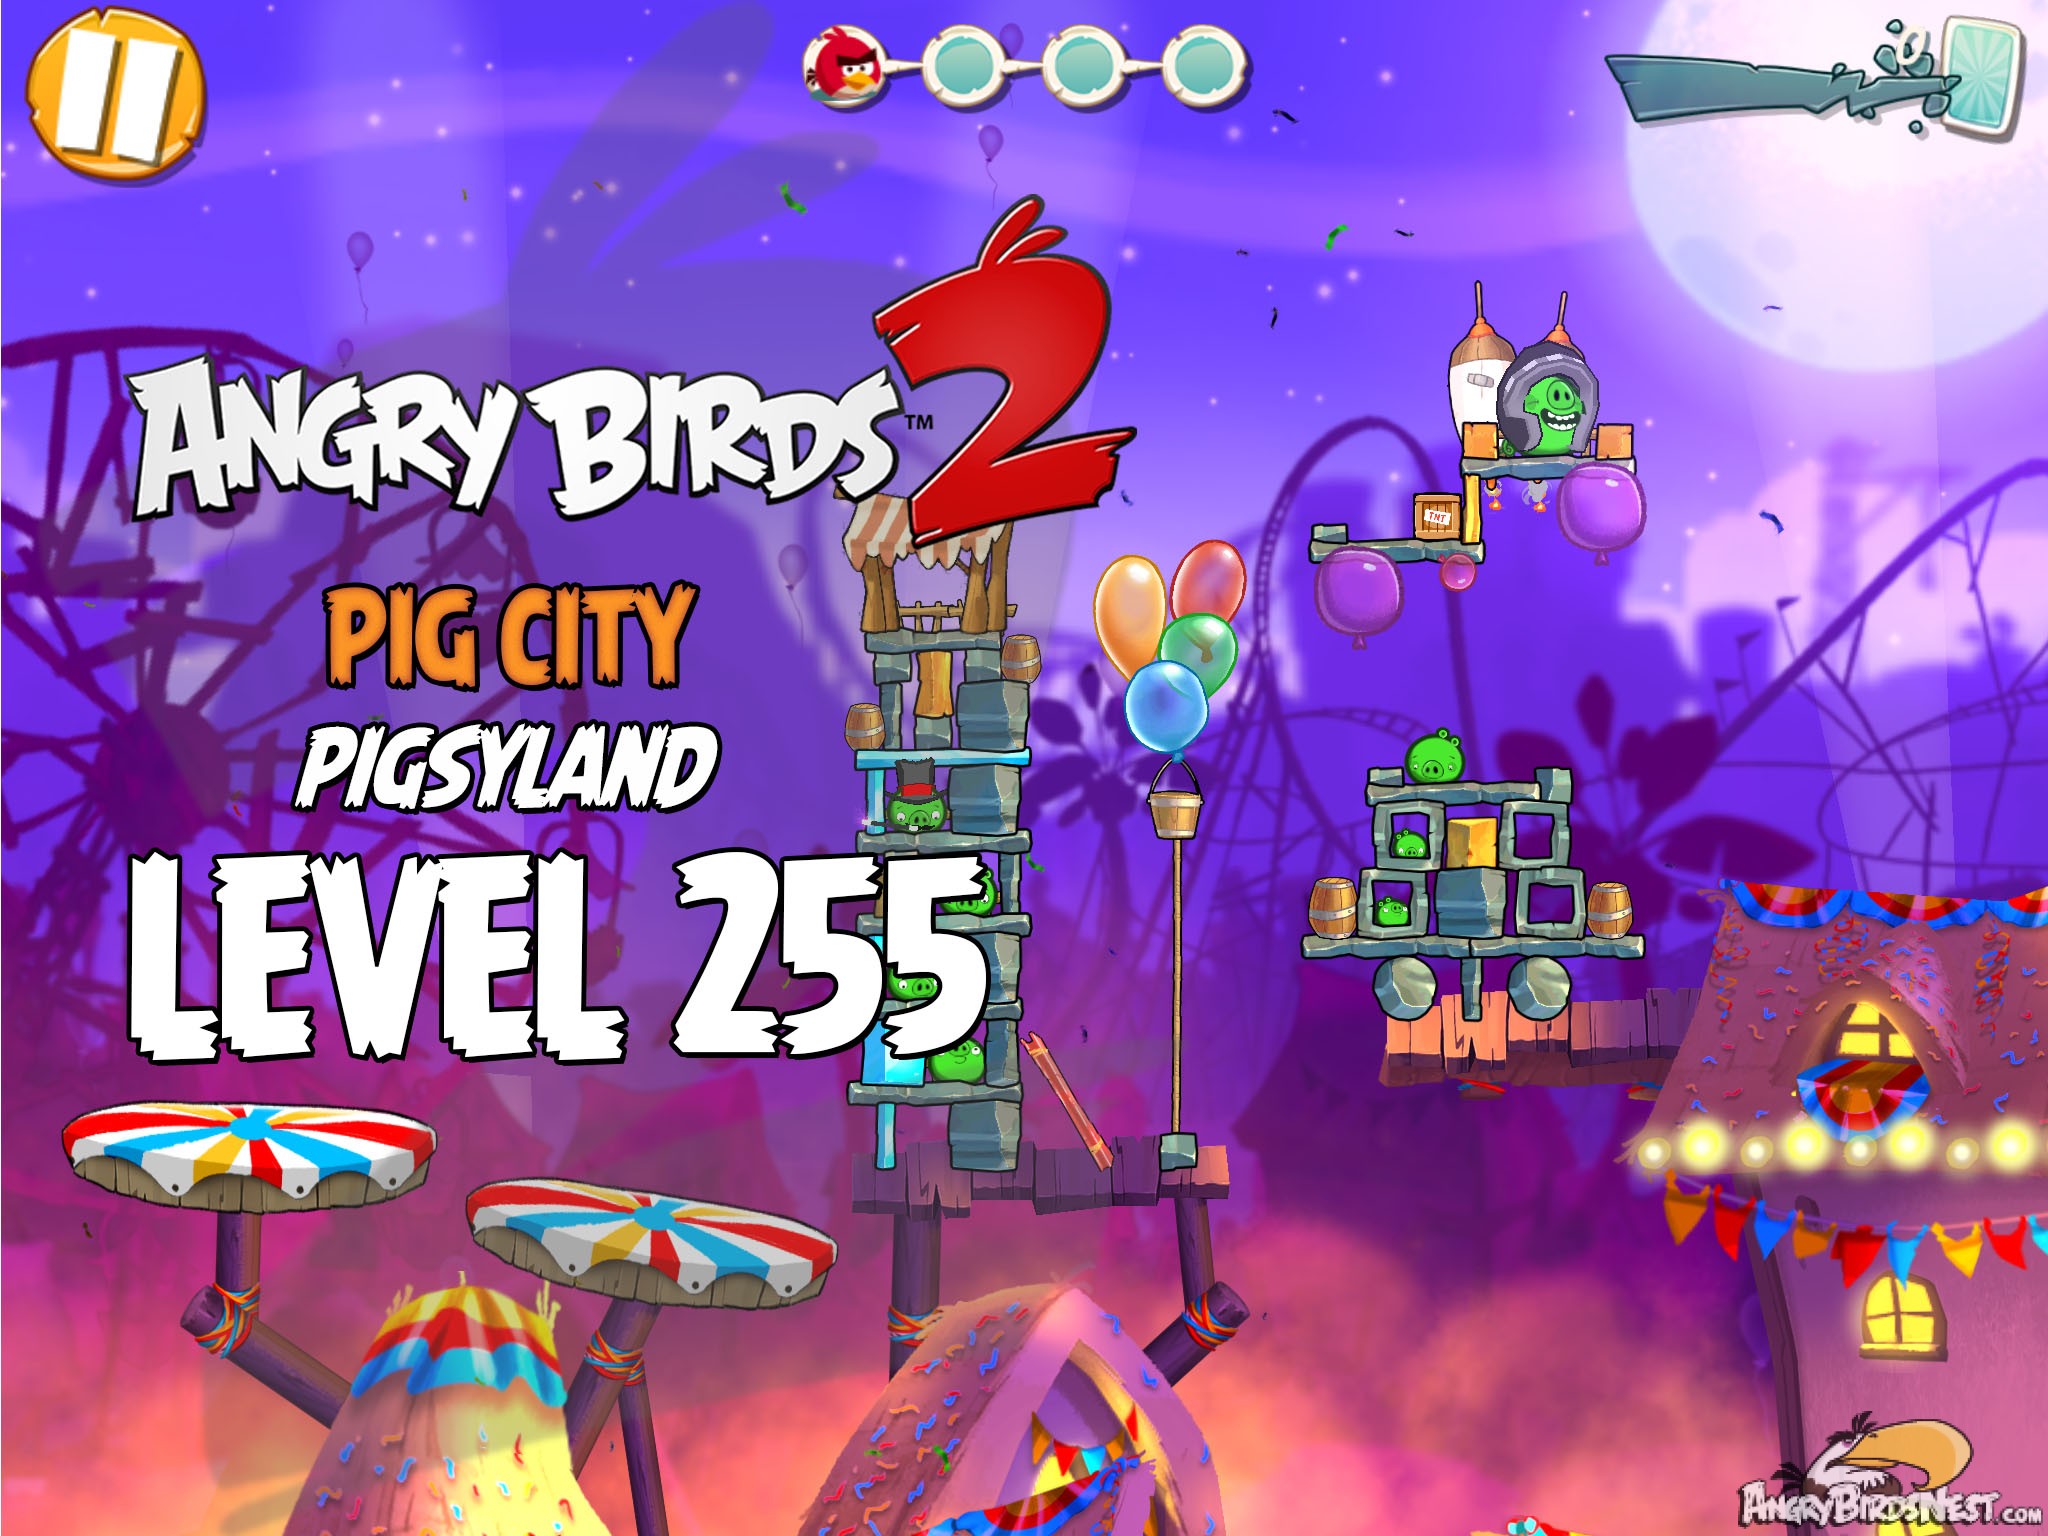 Angry Birds 2 Pig City Pigsyland Level 255